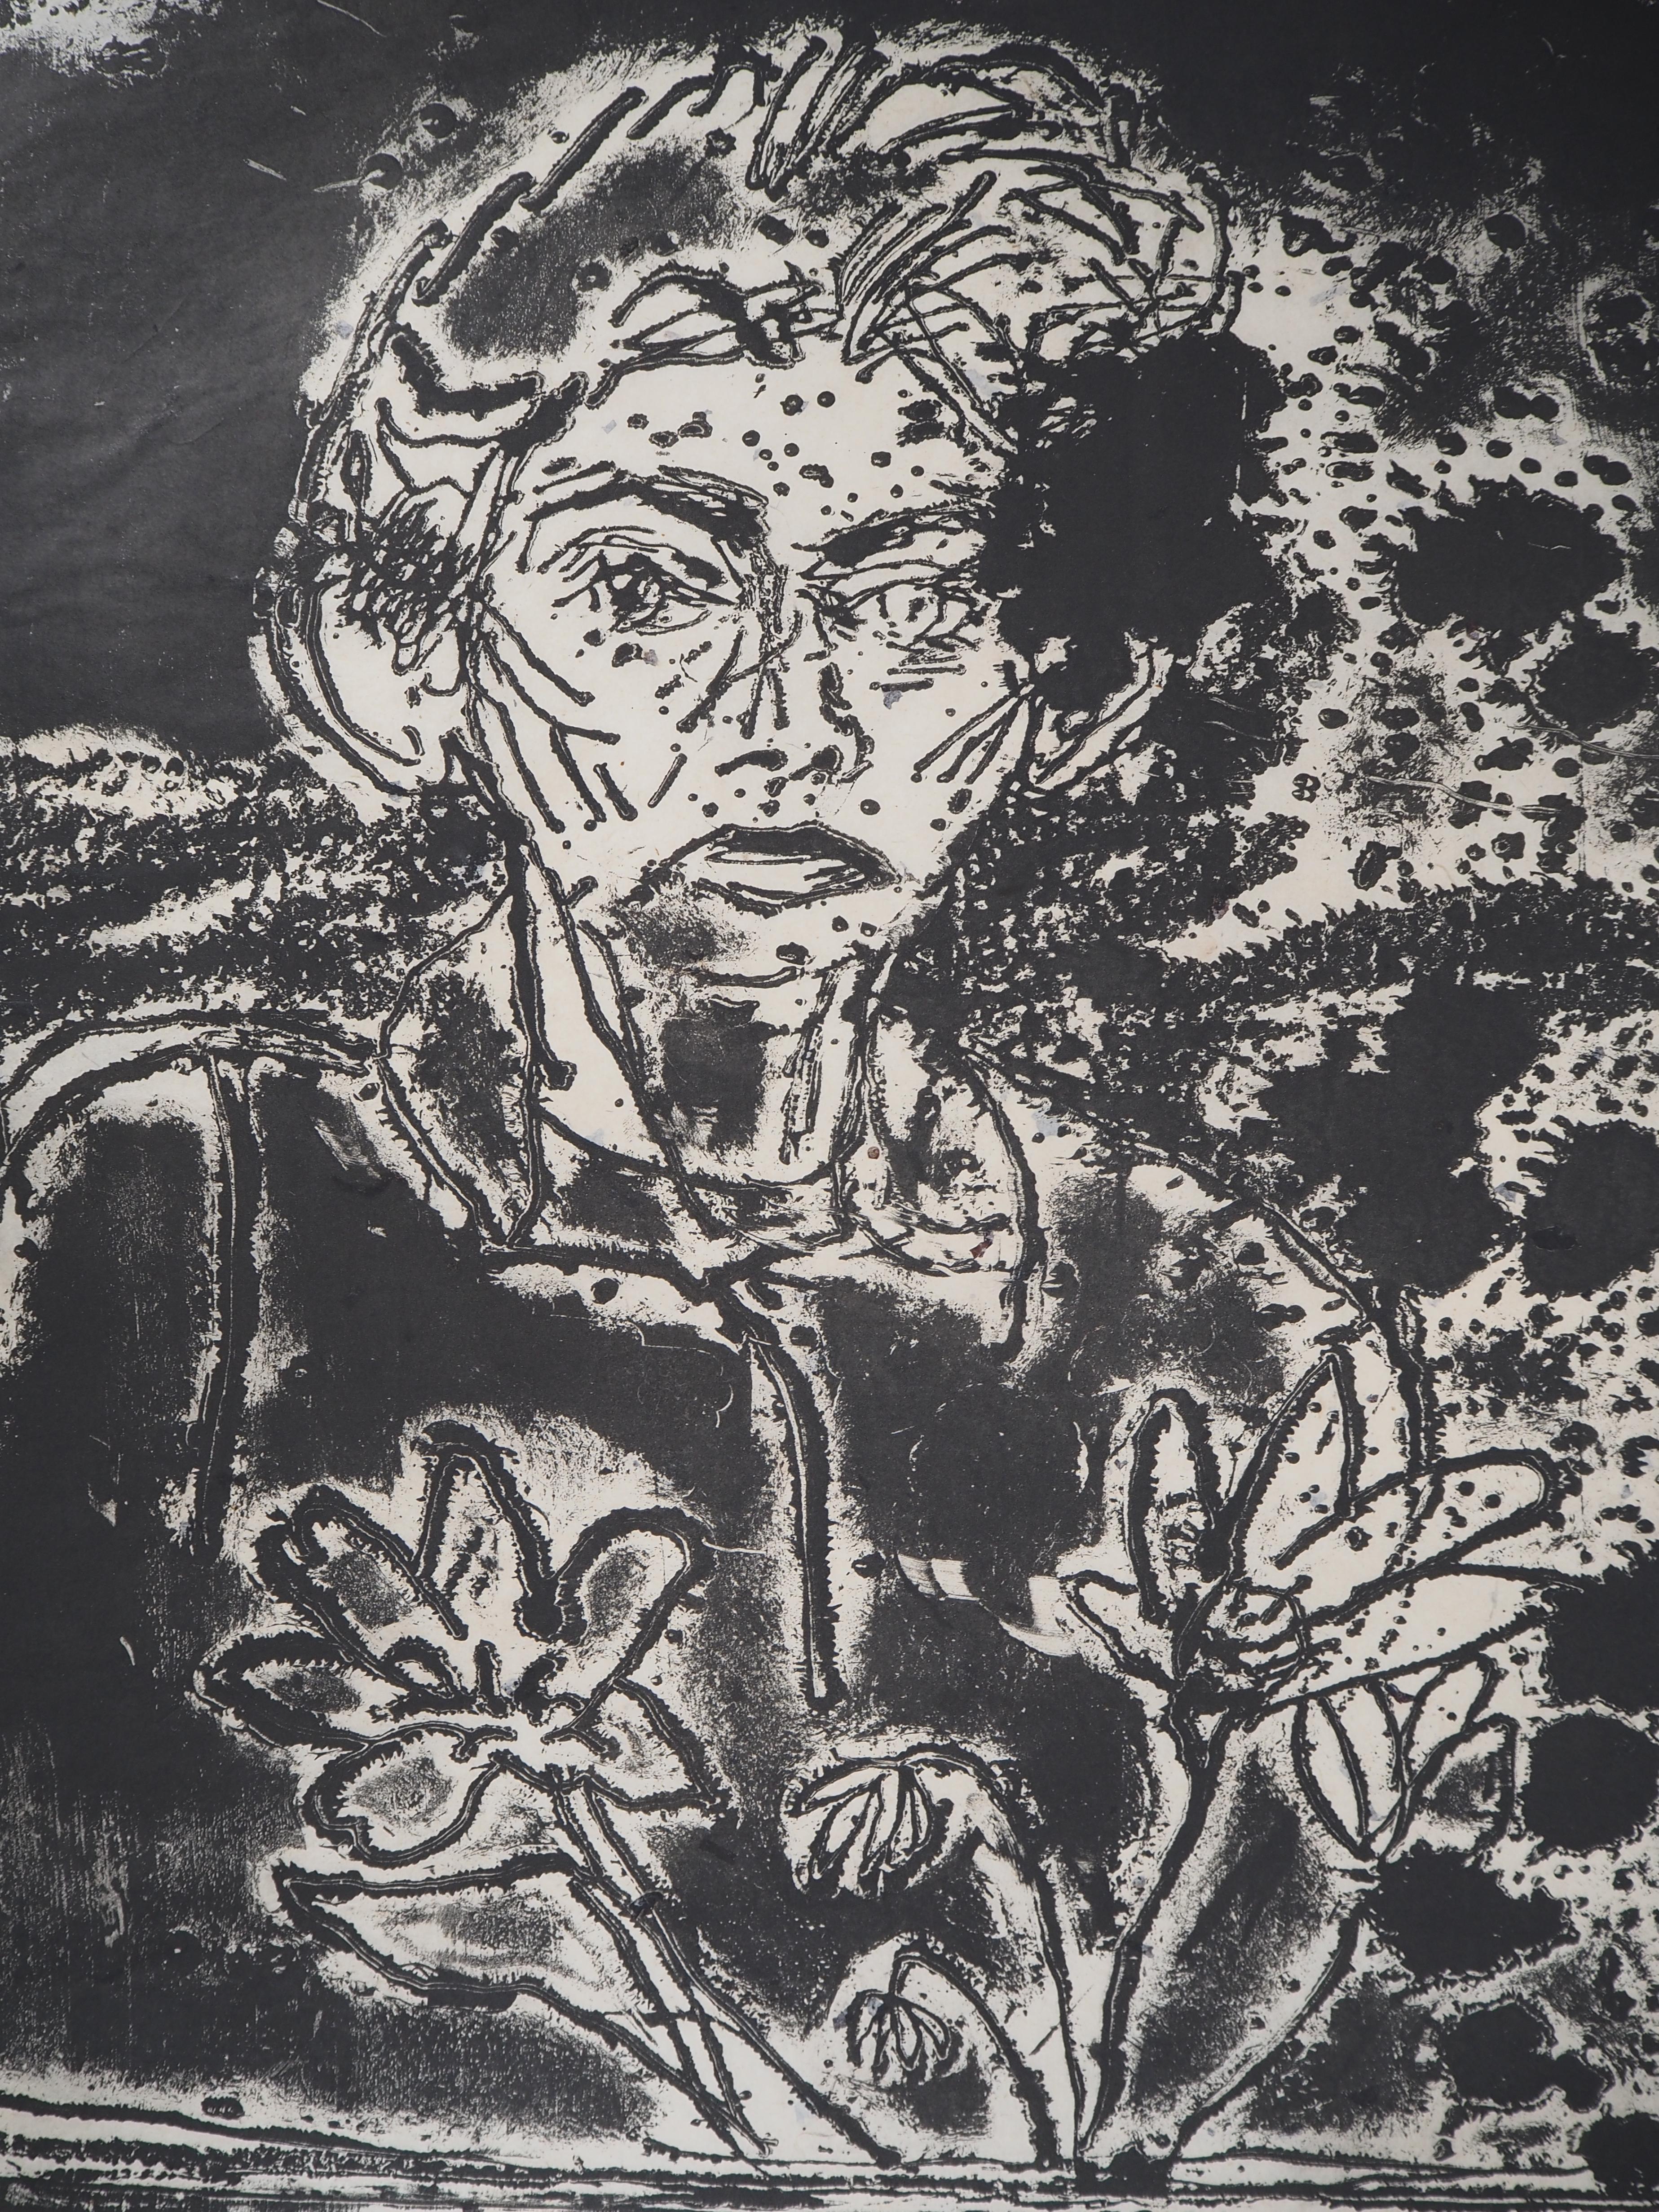 Nancy outside in july XXIII - Original handsigned etching - Black Portrait Print by Jim Dine